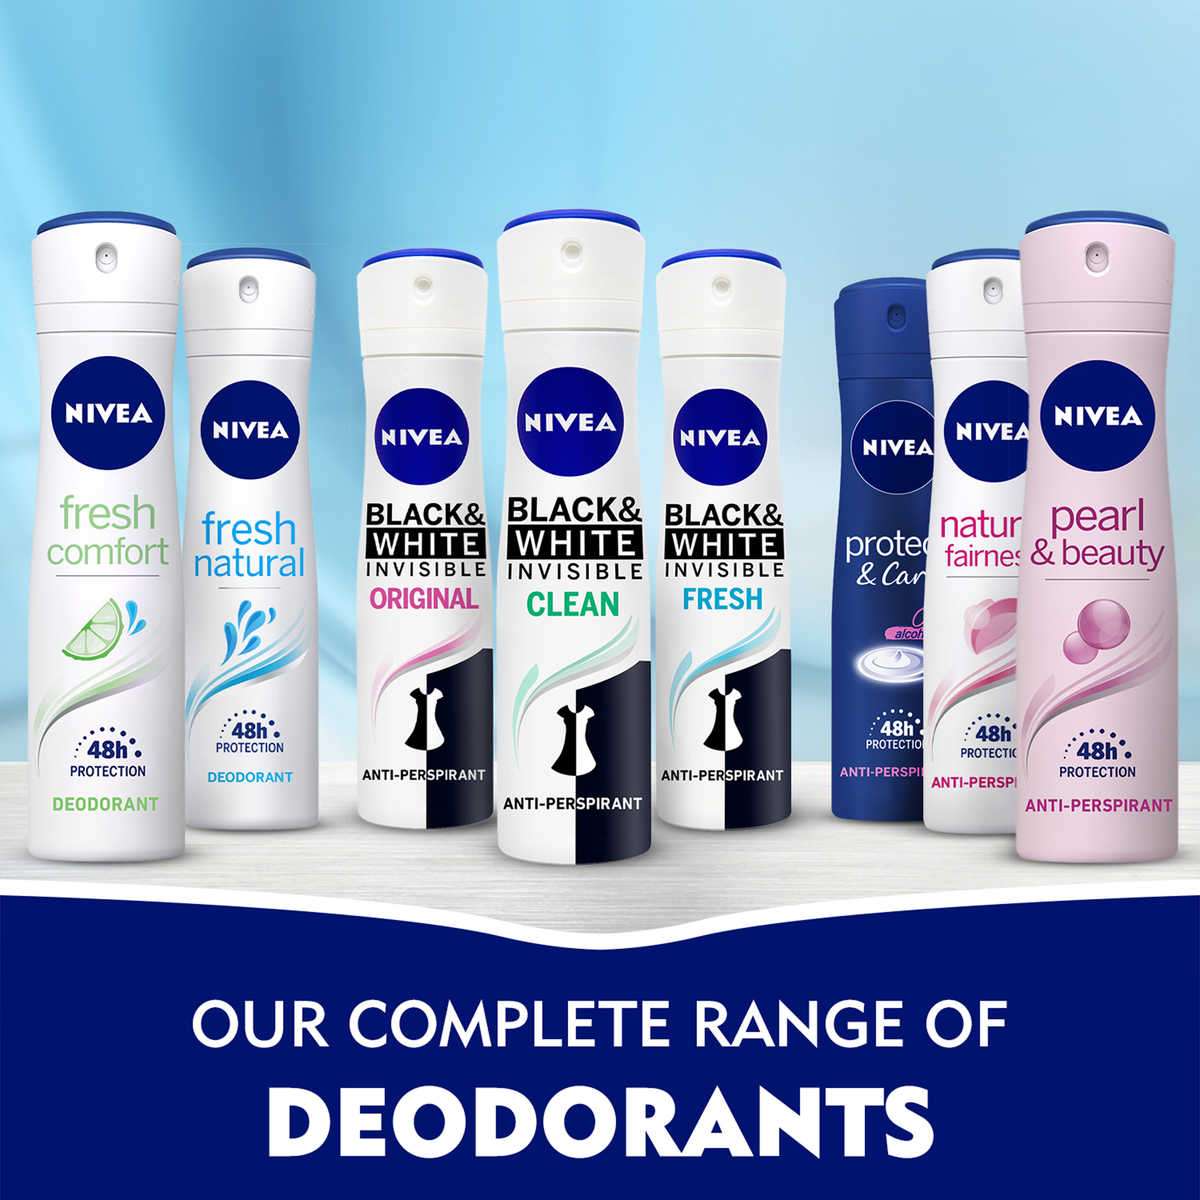 Nivea Deodorant Spray for Women Fresh Comfort 150 ml